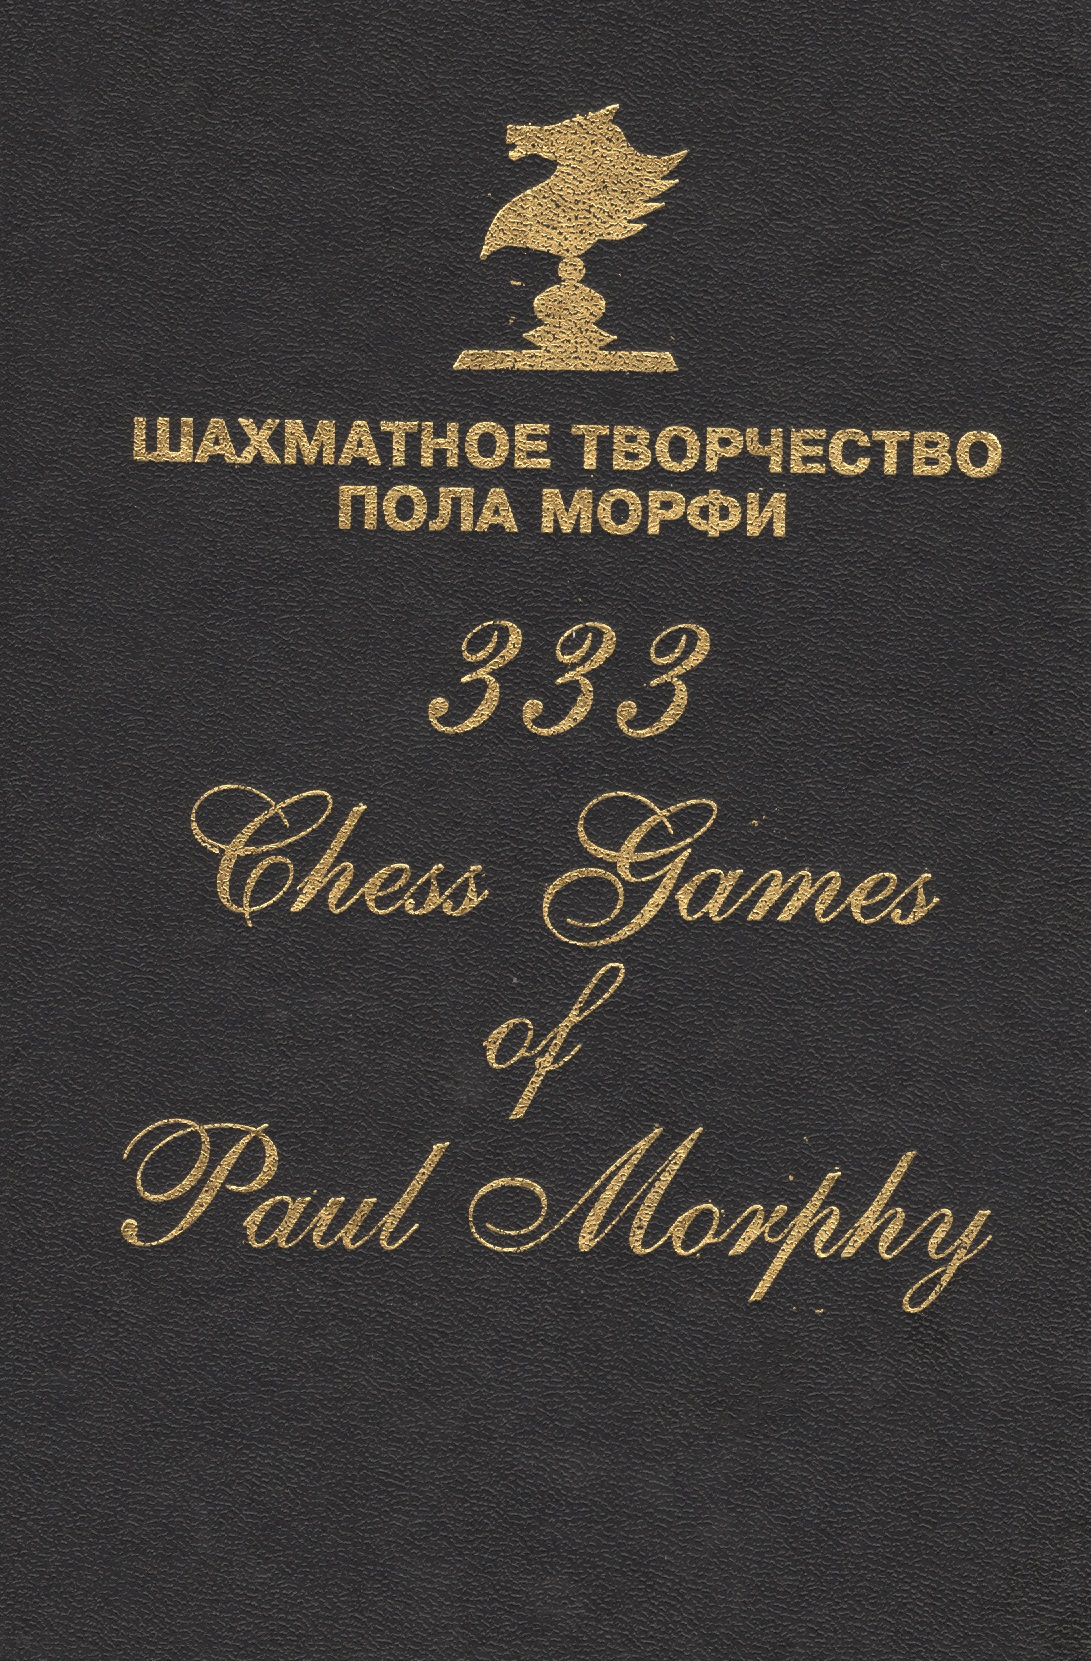 Шахматное творчество Пола Морфи 333 Chess games of Paul Morphy (Сафиуллин) мароци г шахматные партии пола морфи